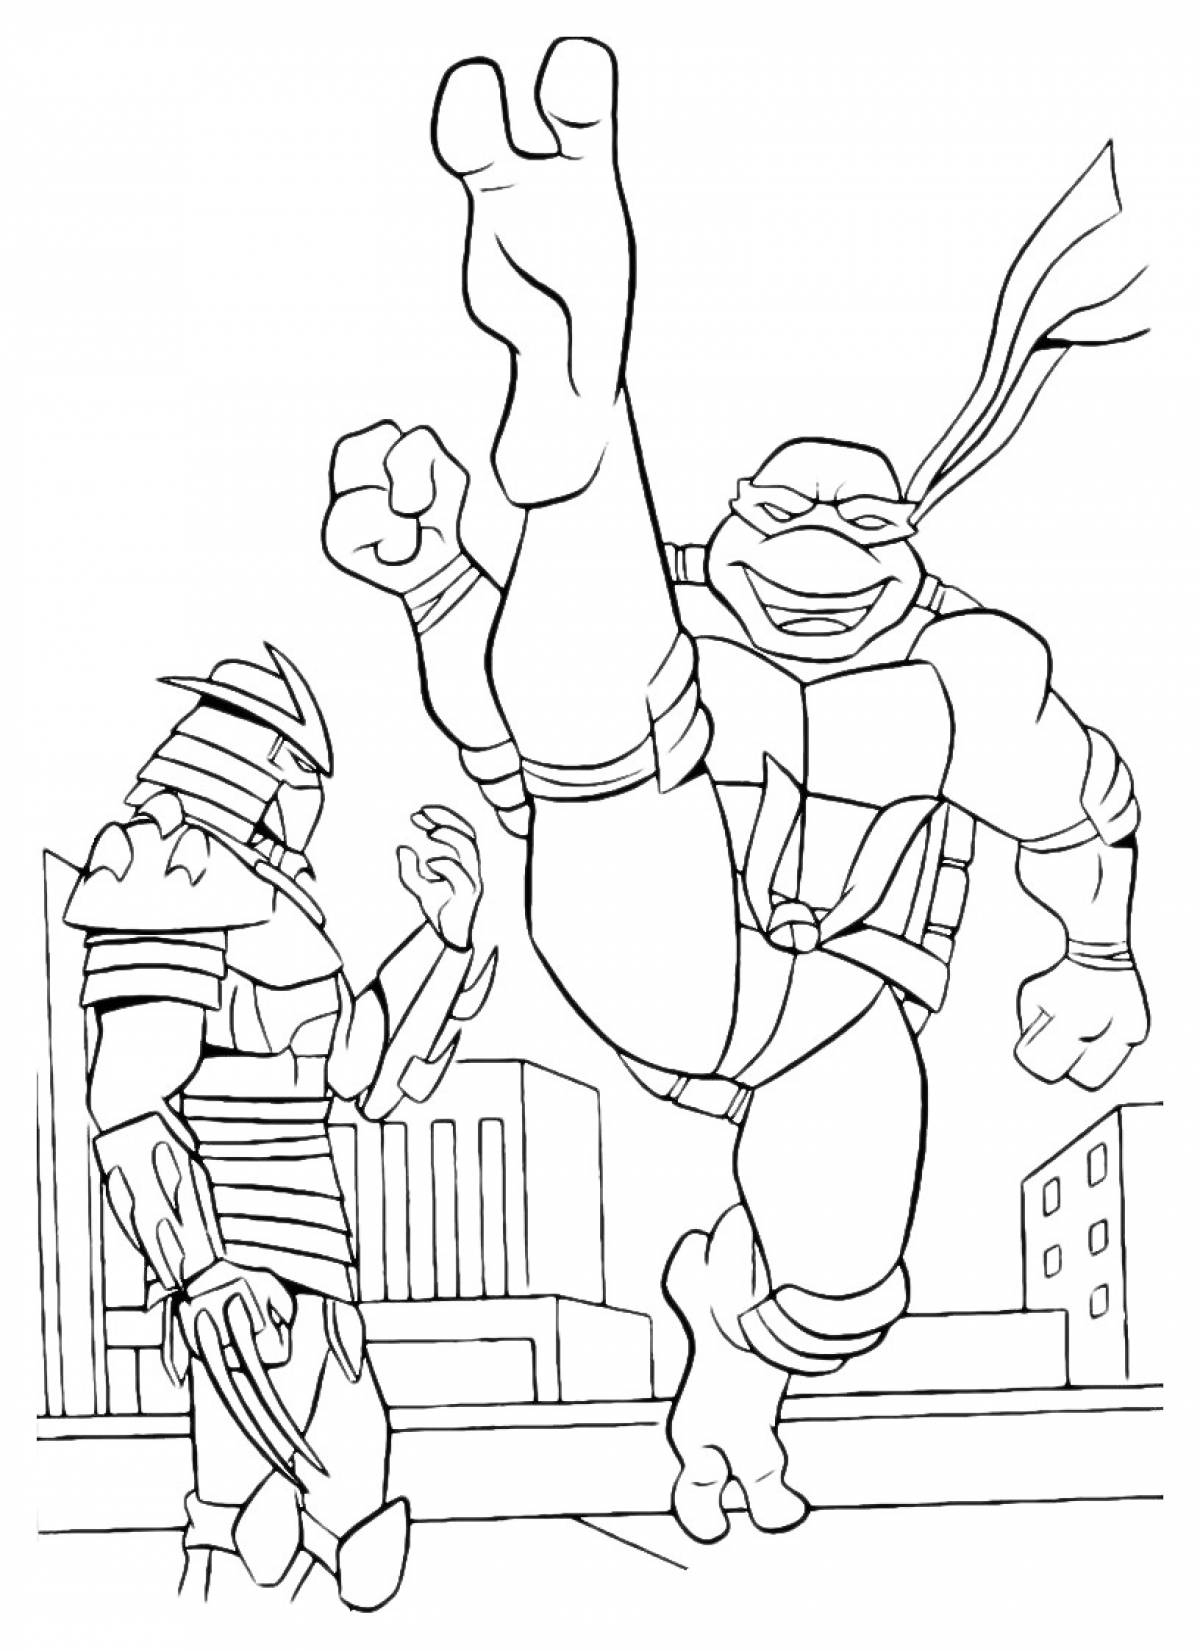 Ninja Turtle and Shredder coloring page